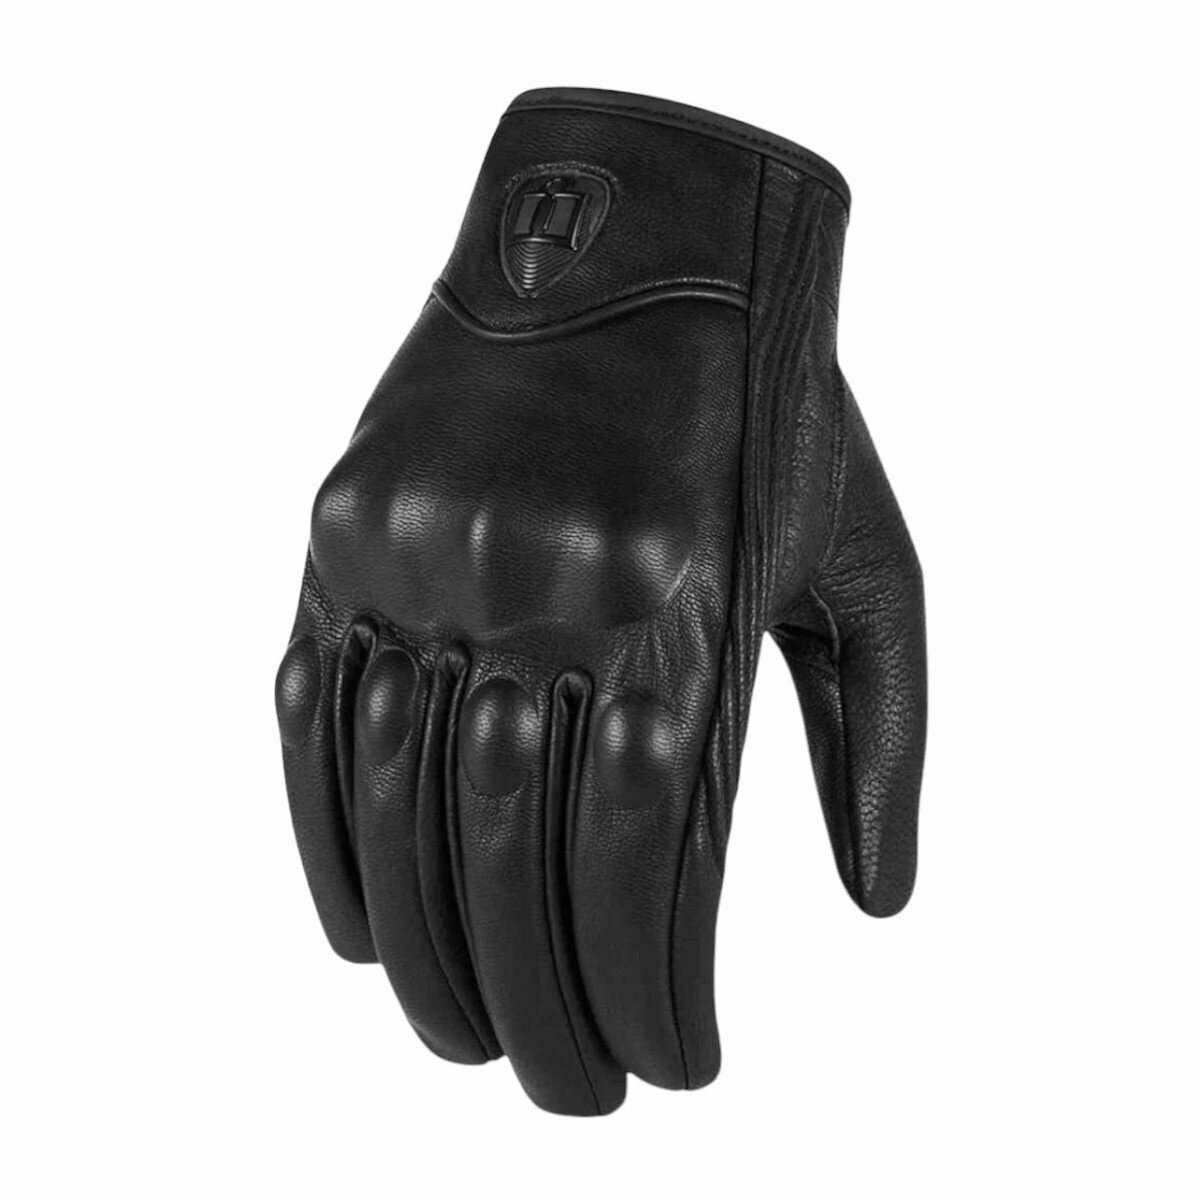 Мотоперчатки перчатки кожаные Y-12 для мотоциклиста на мотоцикл скутер мопед квадроцикл, черные, M